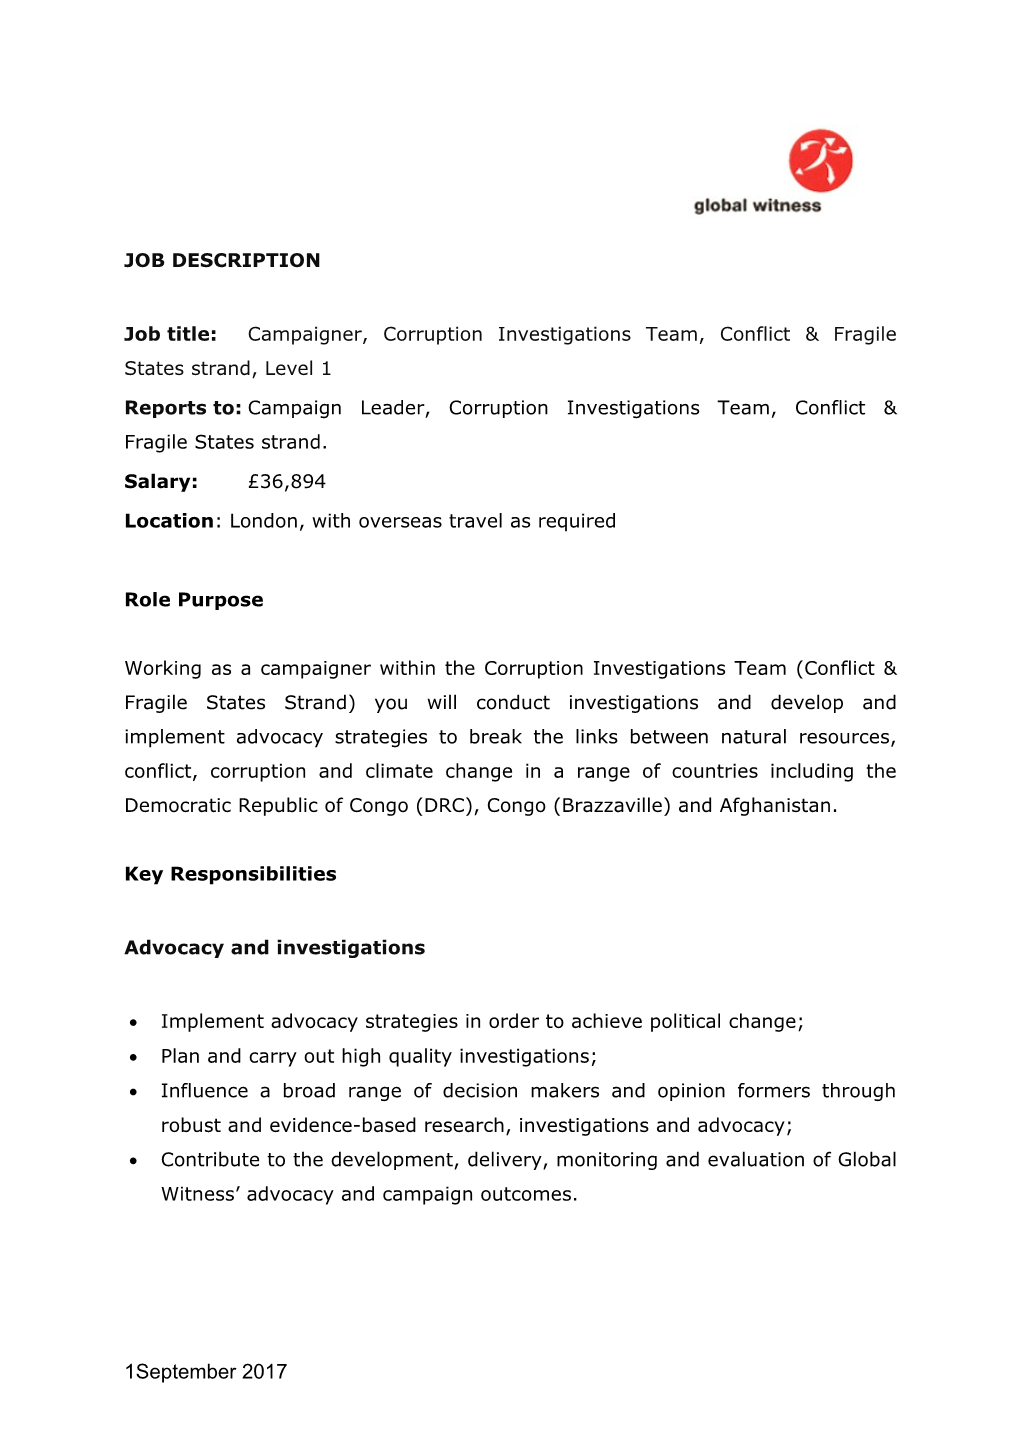 Job Title:Campaigner, Corruption Investigations Team, Conflict & Fragile States Strand, Level 1